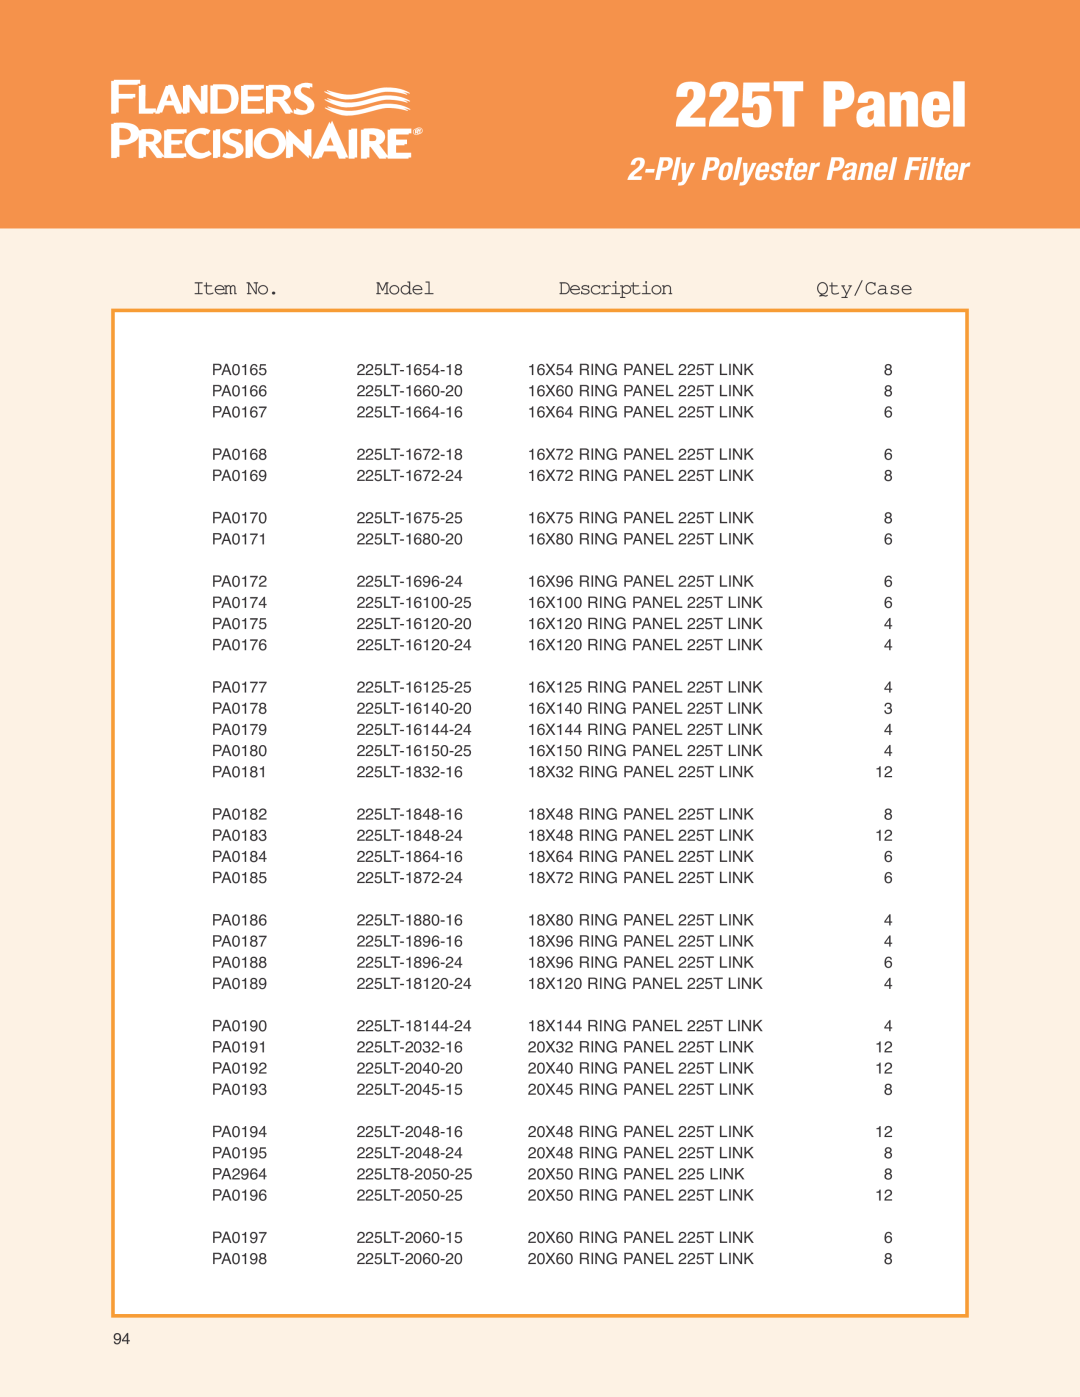 Precisionaire 225T Panels manual PlyPolyester Panel Filter, Item No, Model, Description, Qty/Case 